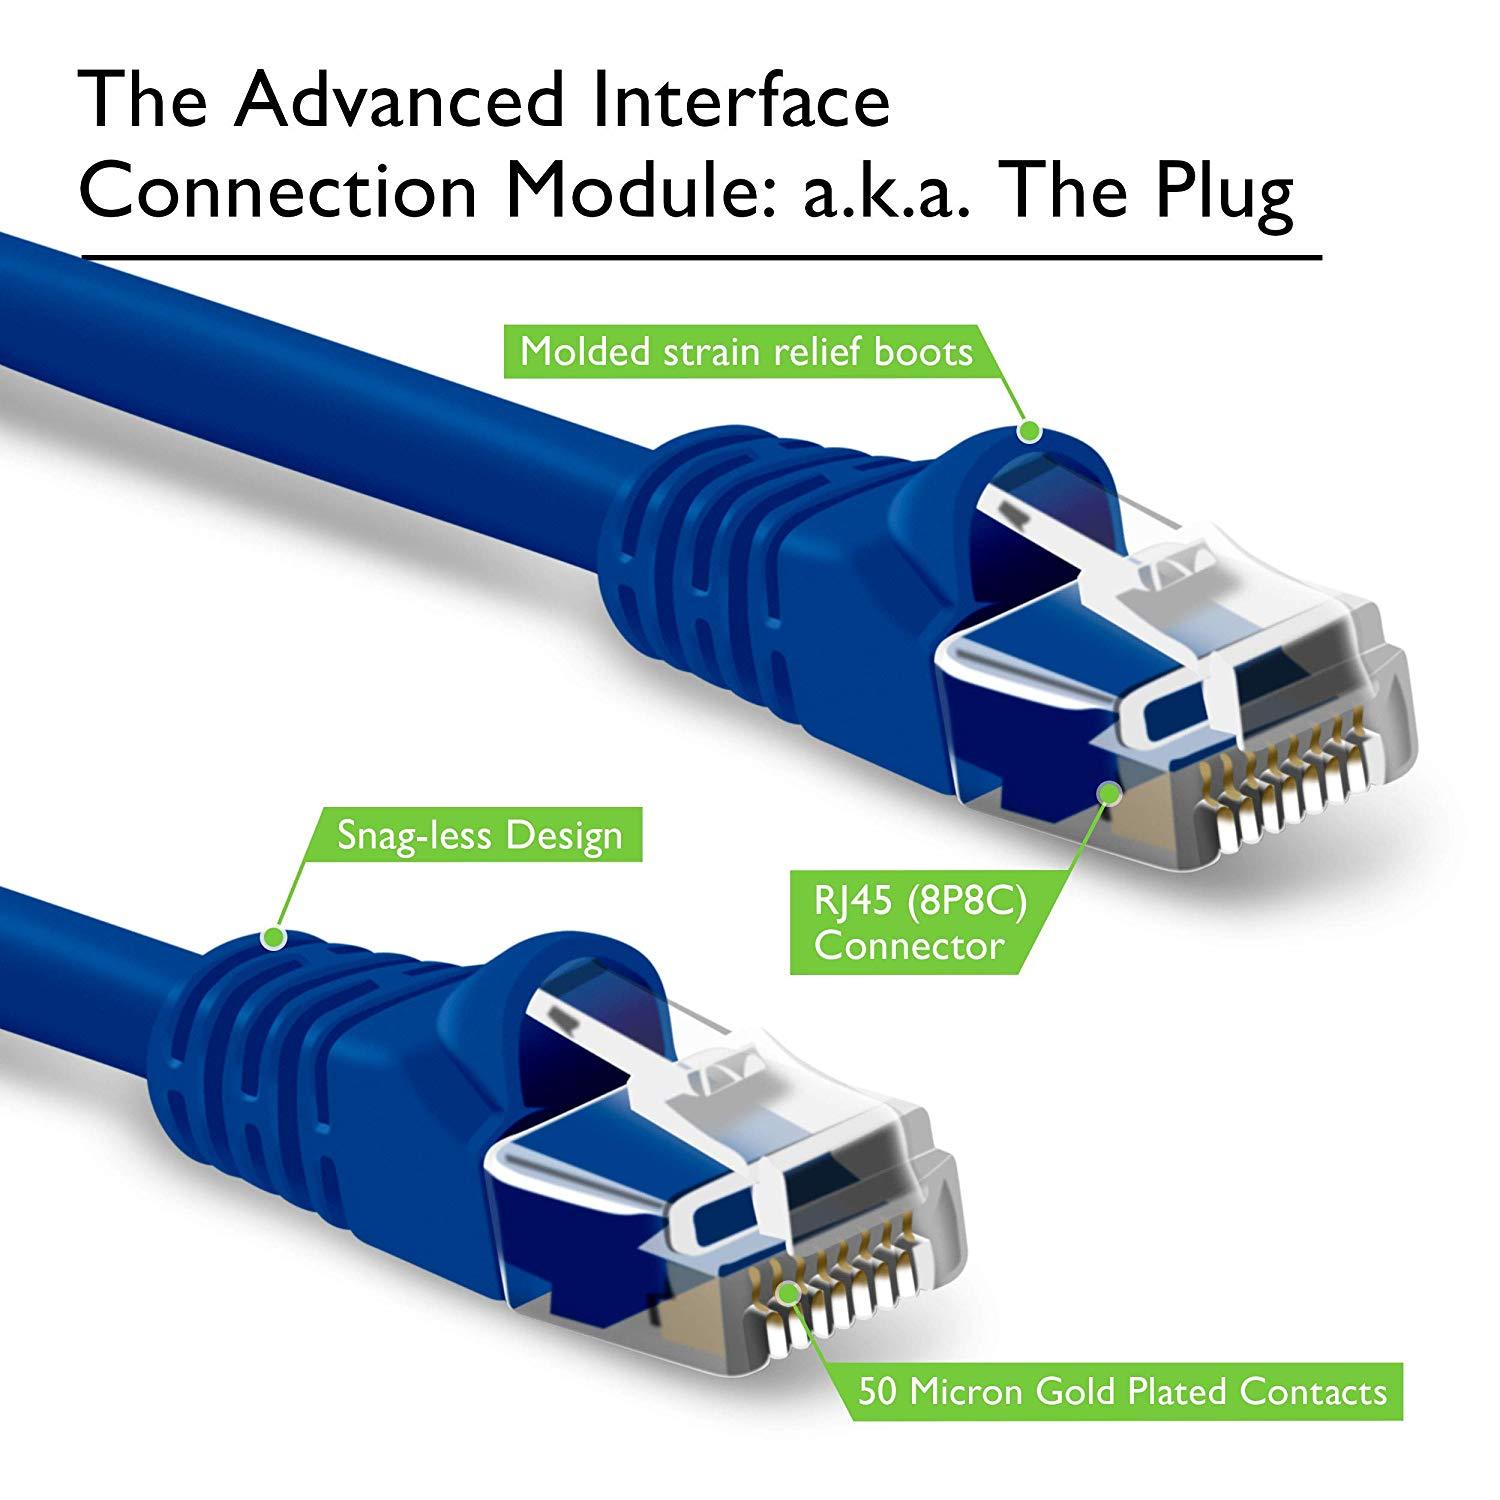 30m CAT6 Internet Ethernet Data Patch Cable Copper RJ45 Router Network Lead